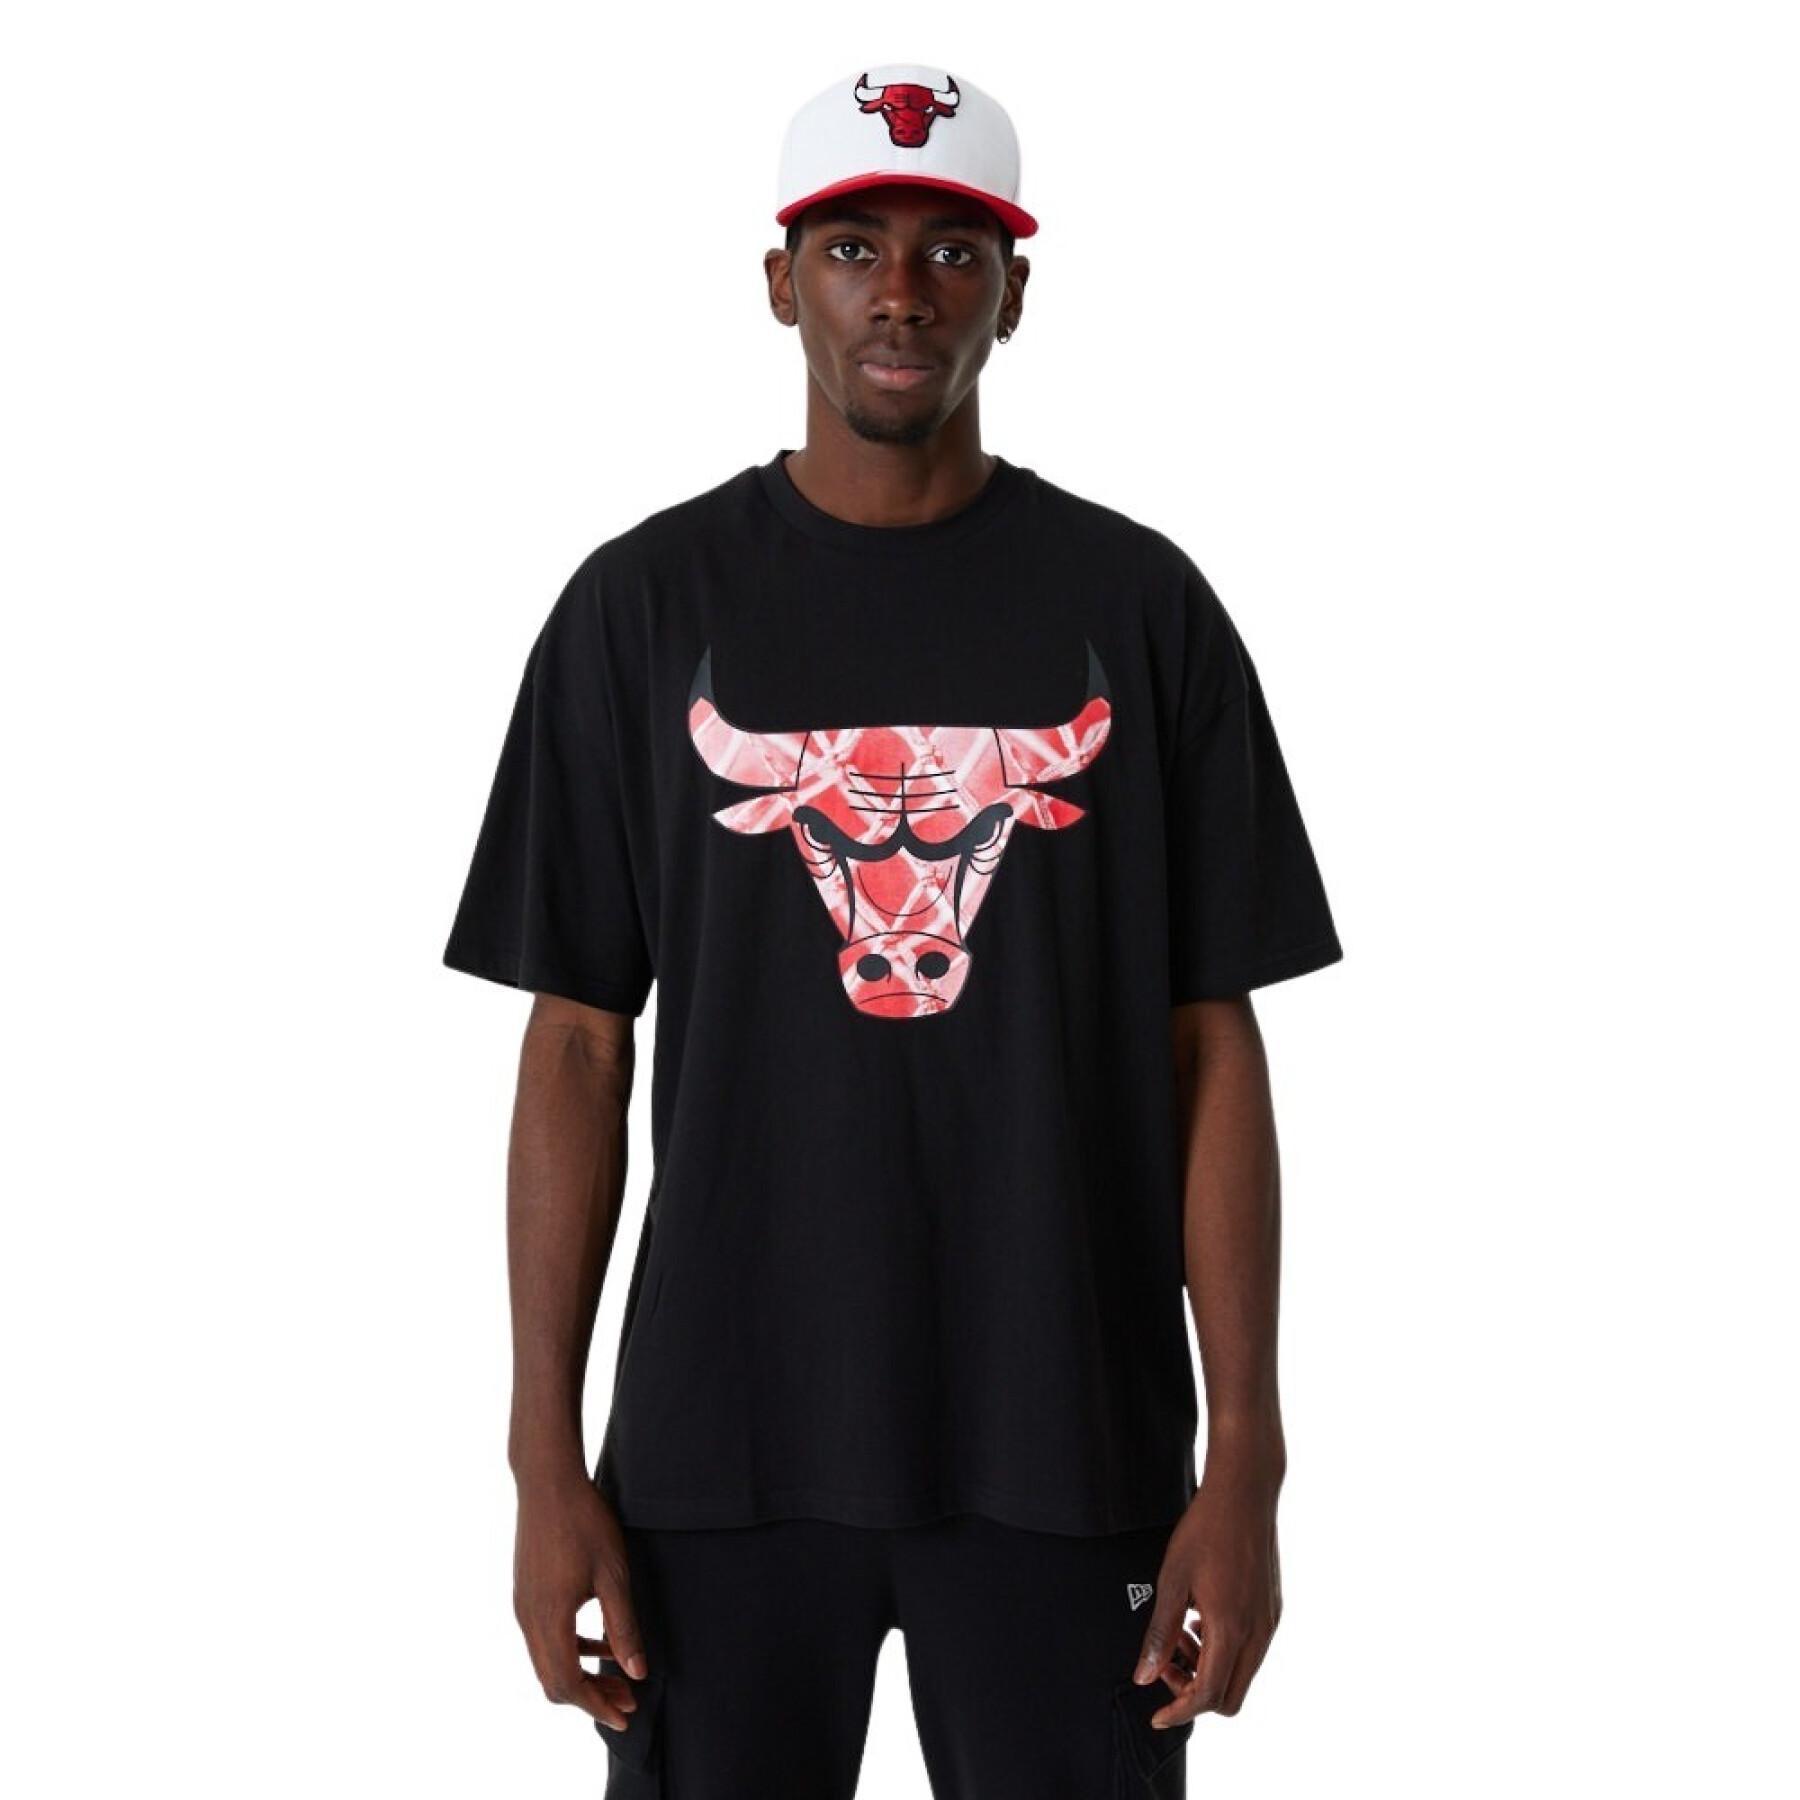 Camiseta mujergo Bulls NBA Infill Logo